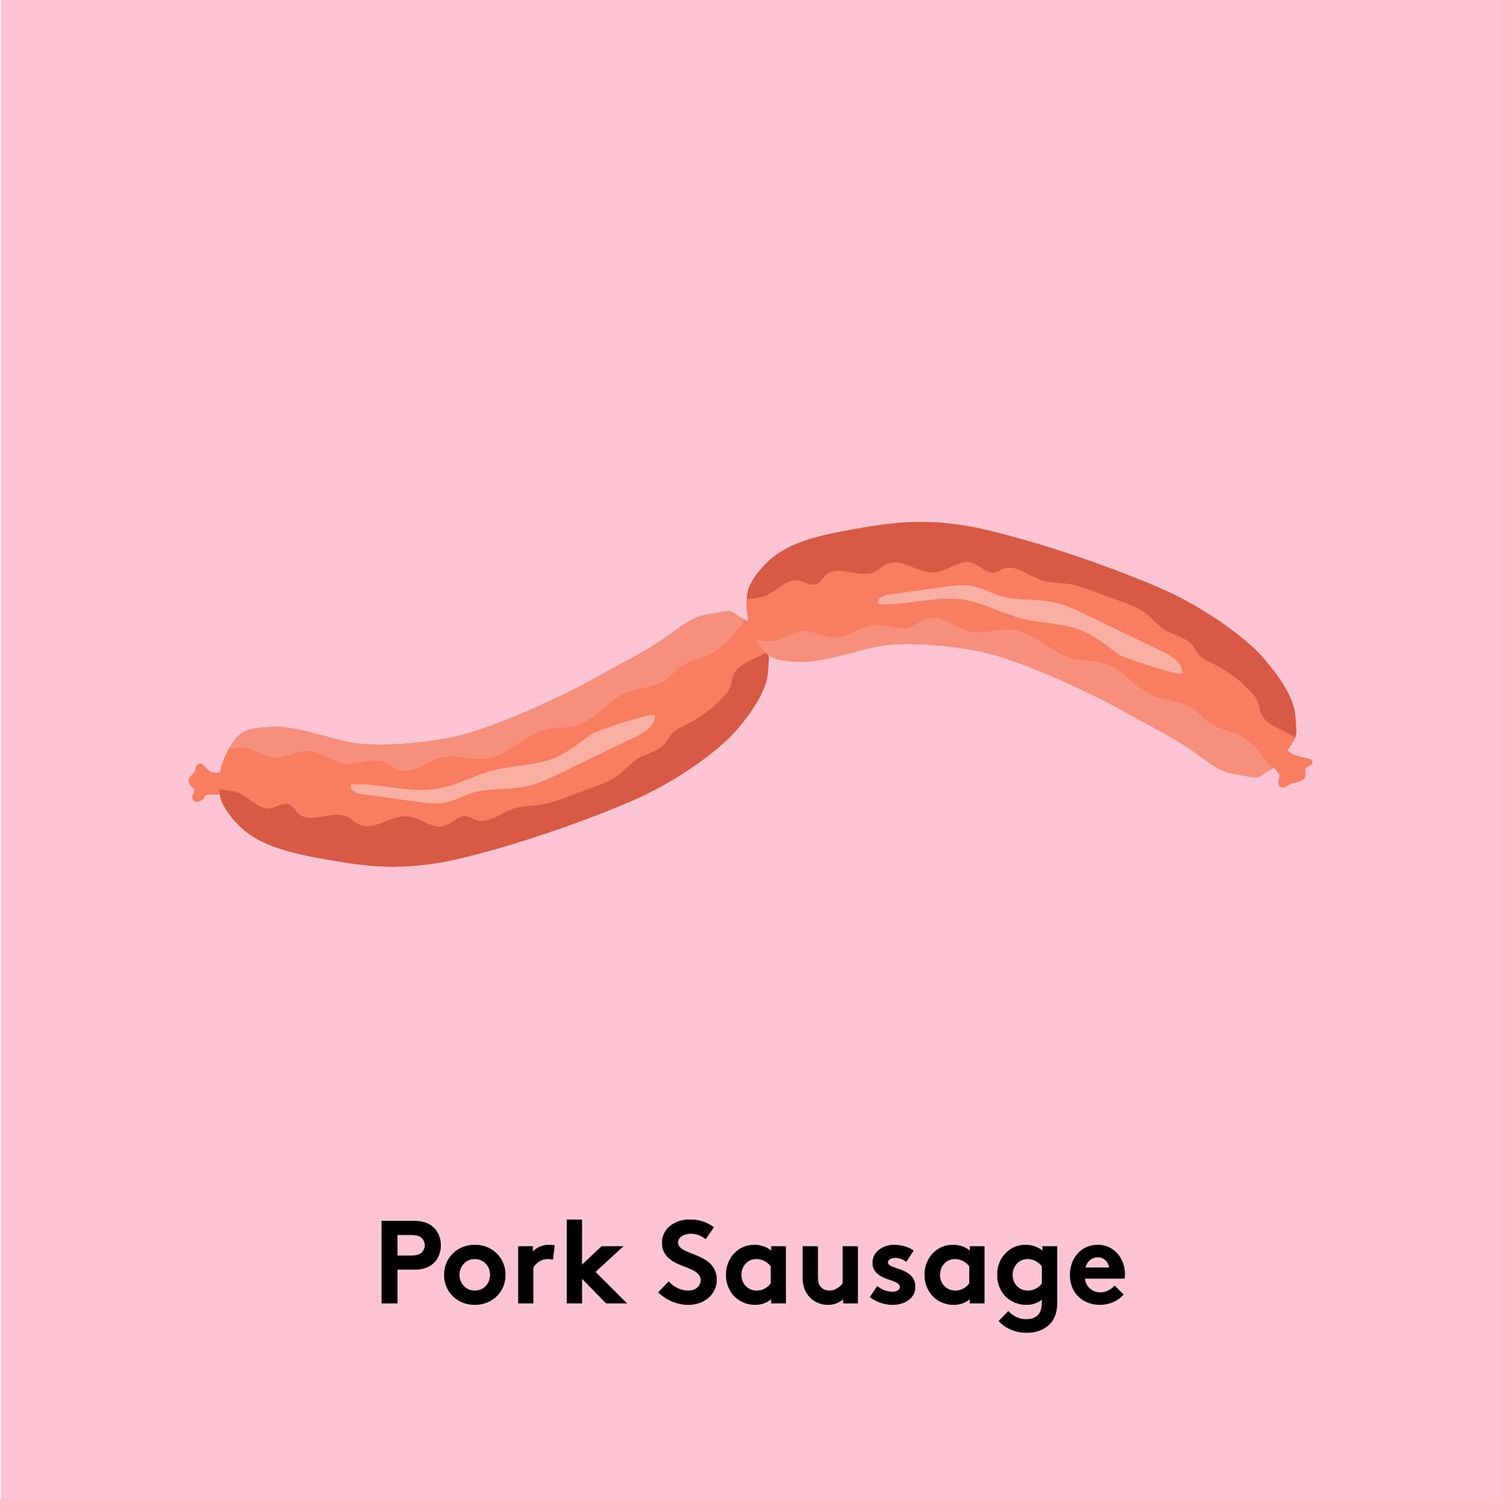 Types of pork cuts - Pork Sausage